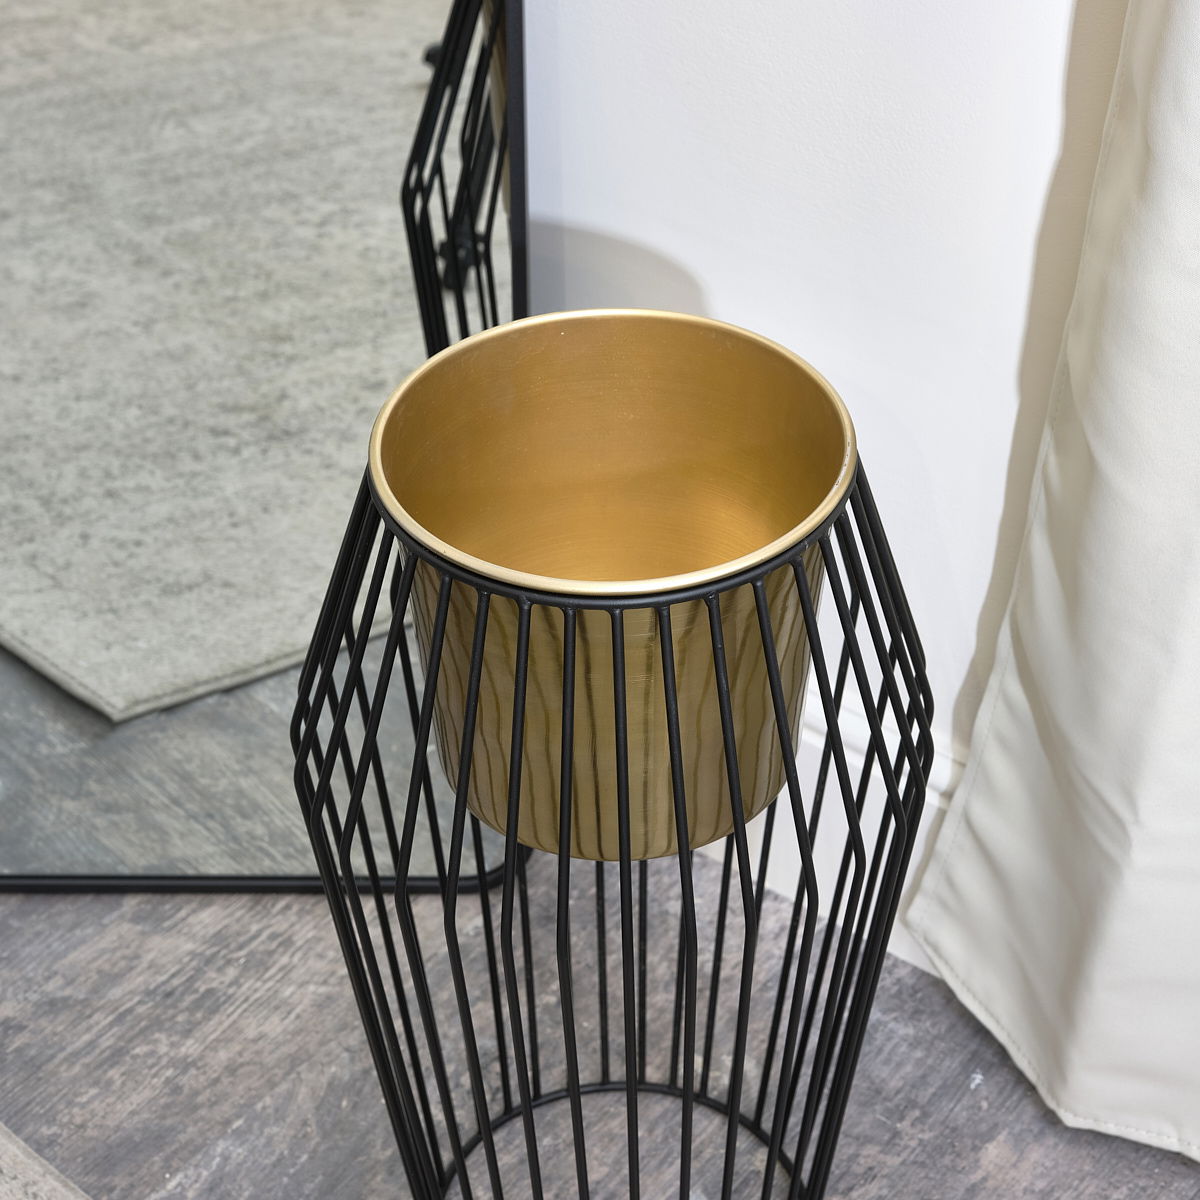 Large Black & Gold Wire Planter Pot Stand - 55cm